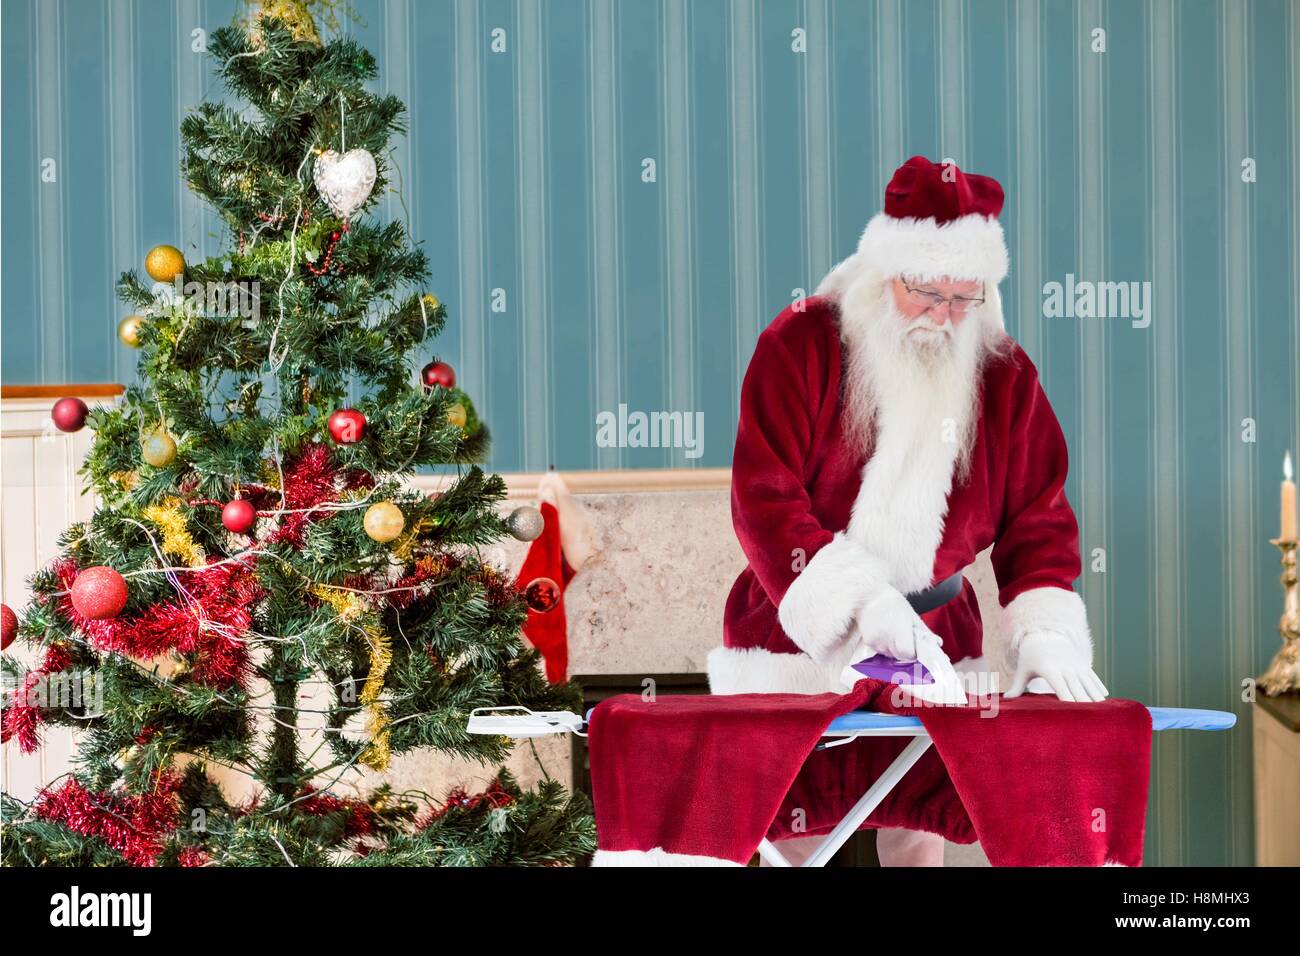 Santa claus ironing his clothes Stock Photo